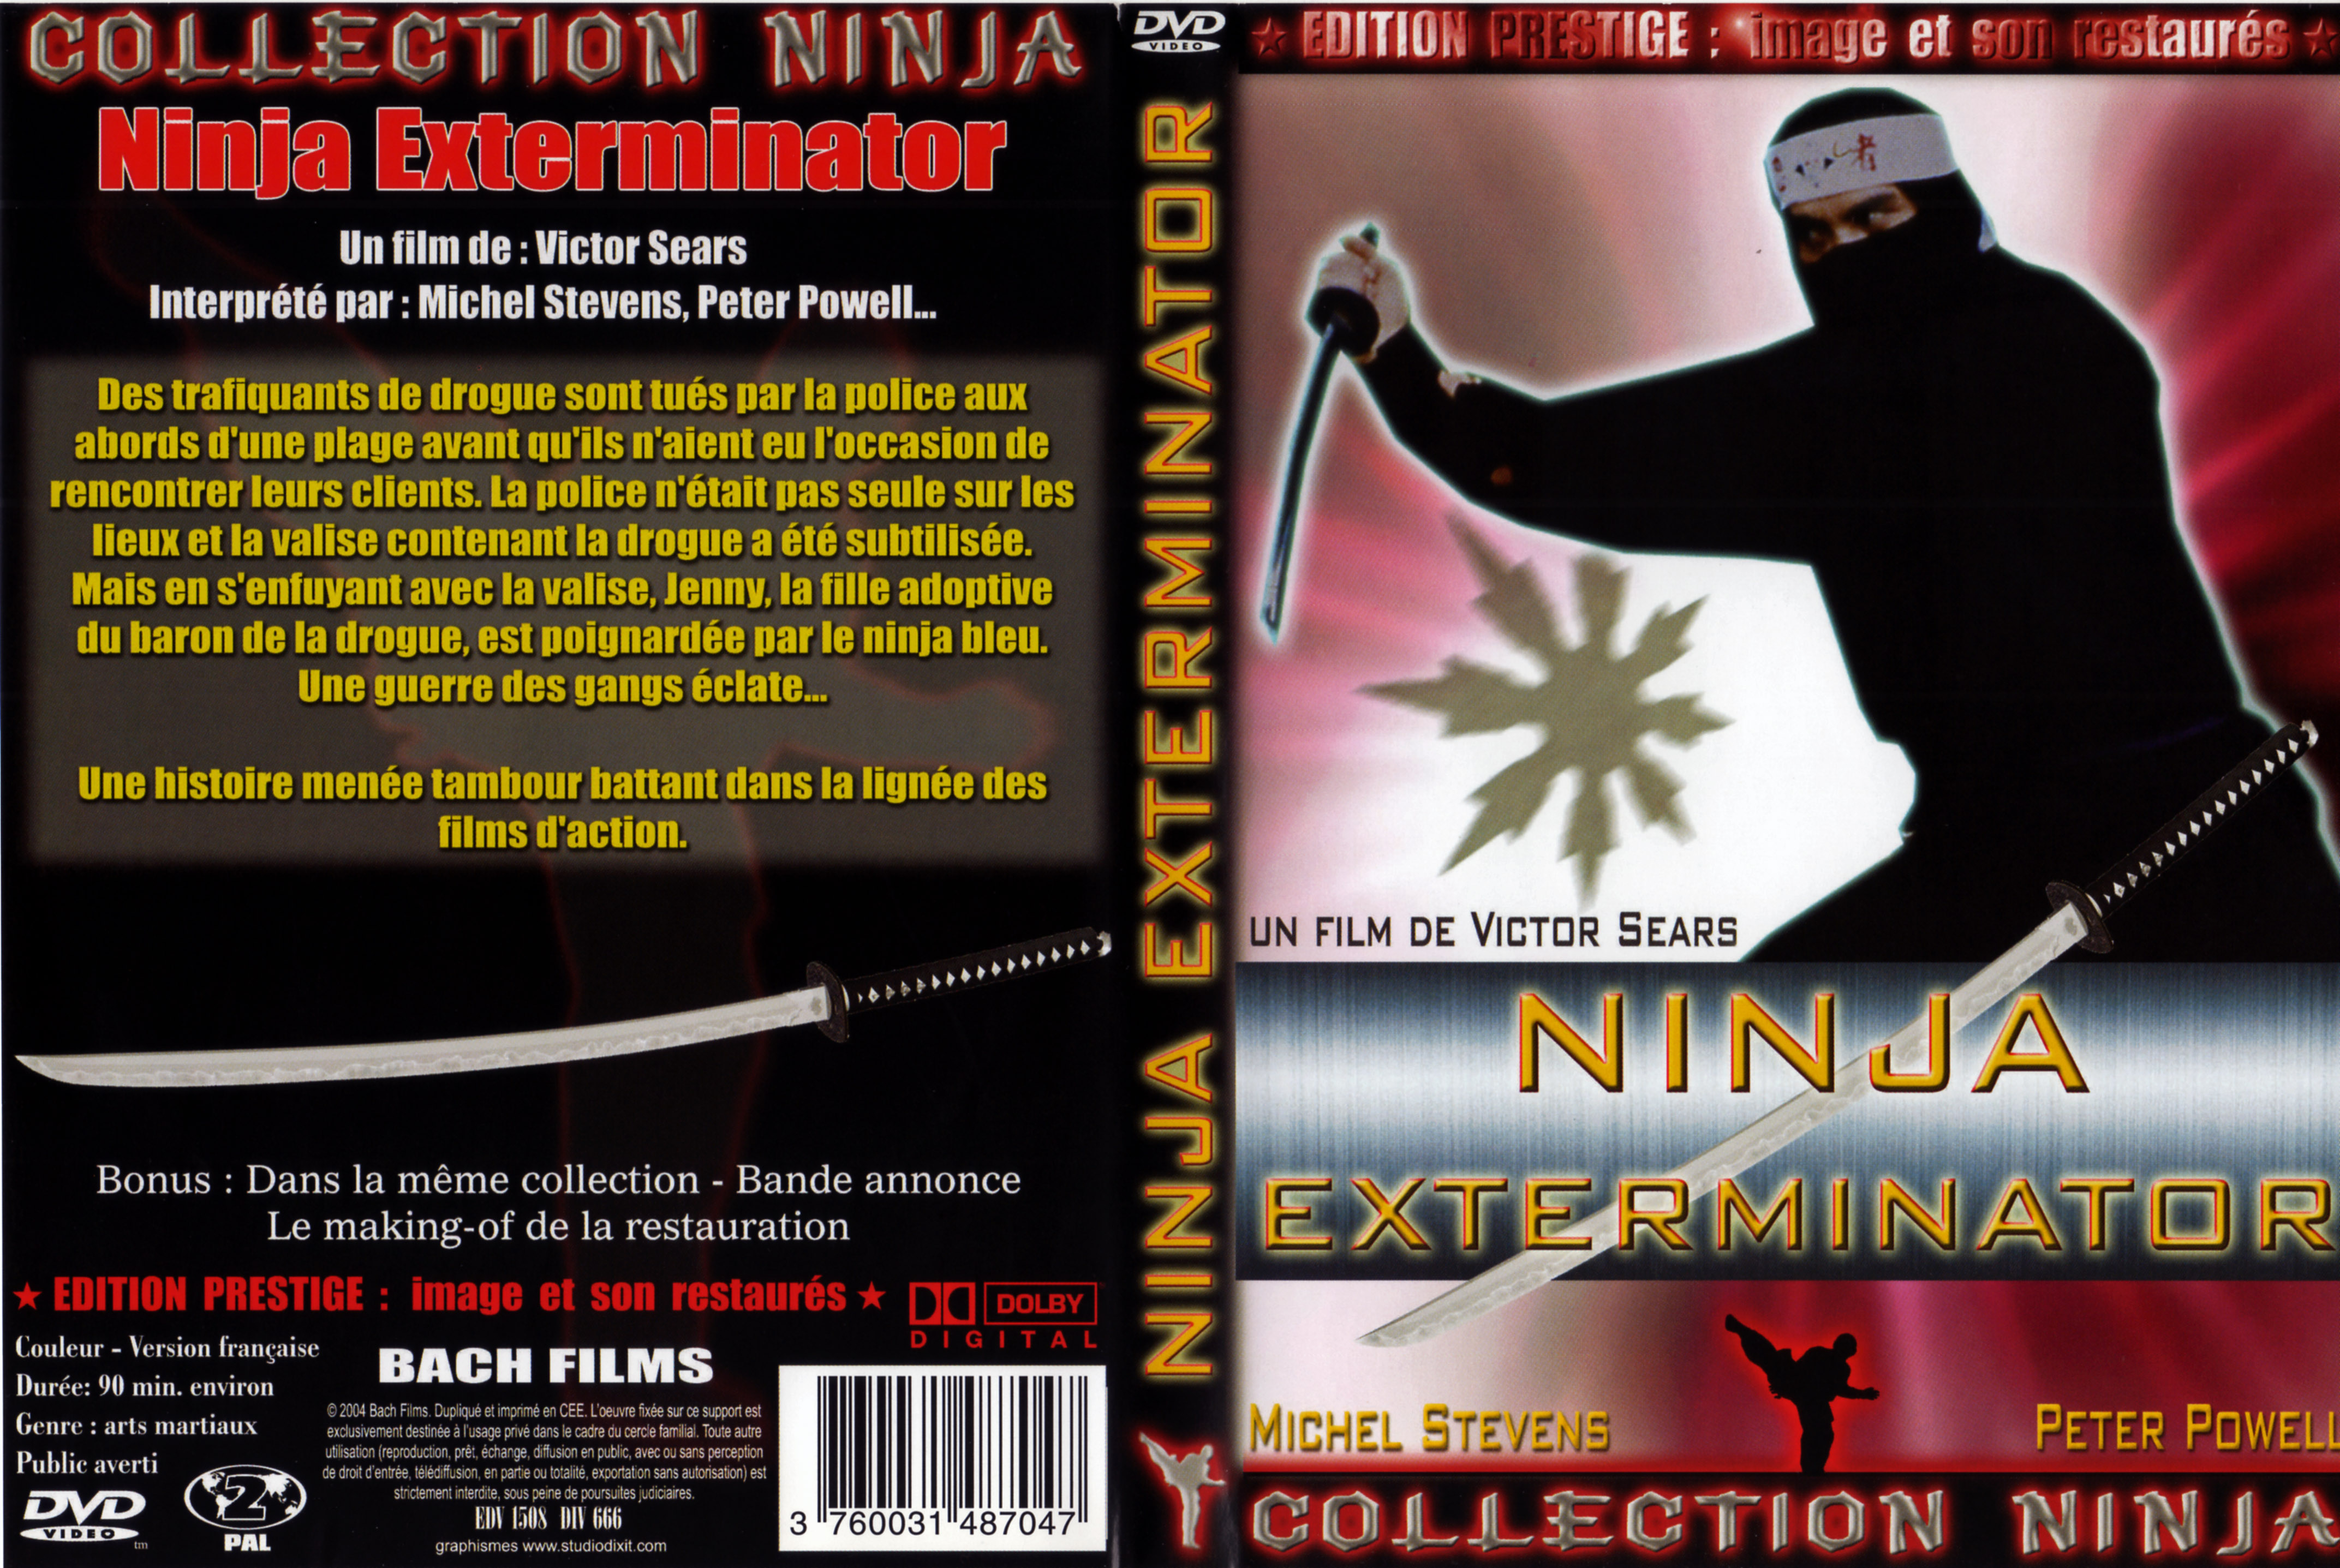 Jaquette DVD Ninja exterminator